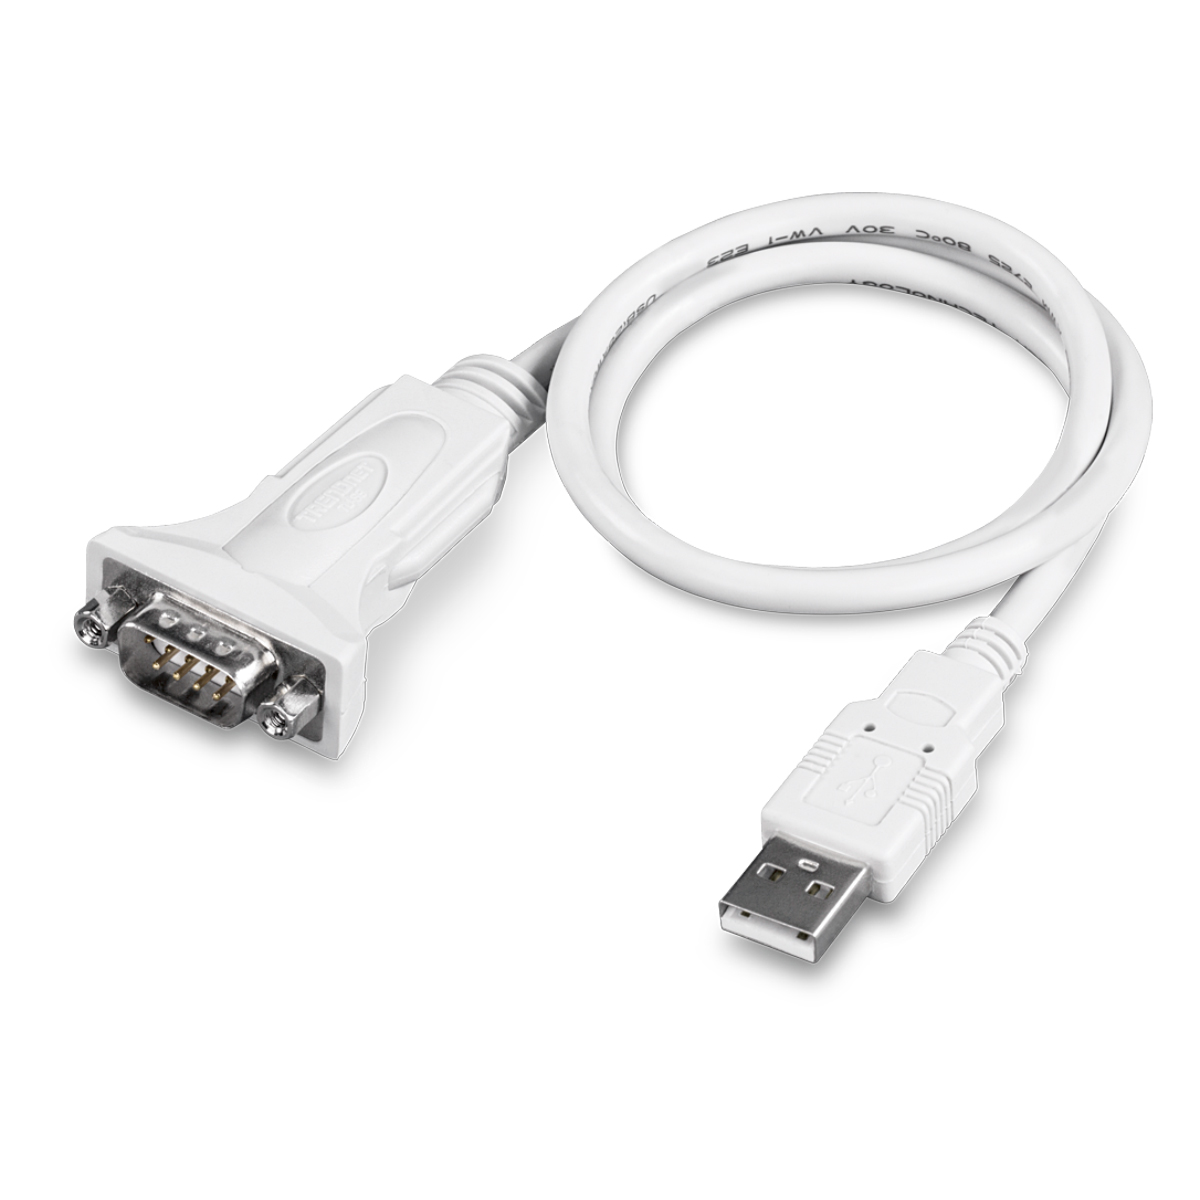 Cabo Conversor USB para Serial DB9 (RS232) - 60cm - TrendNet TU-S9